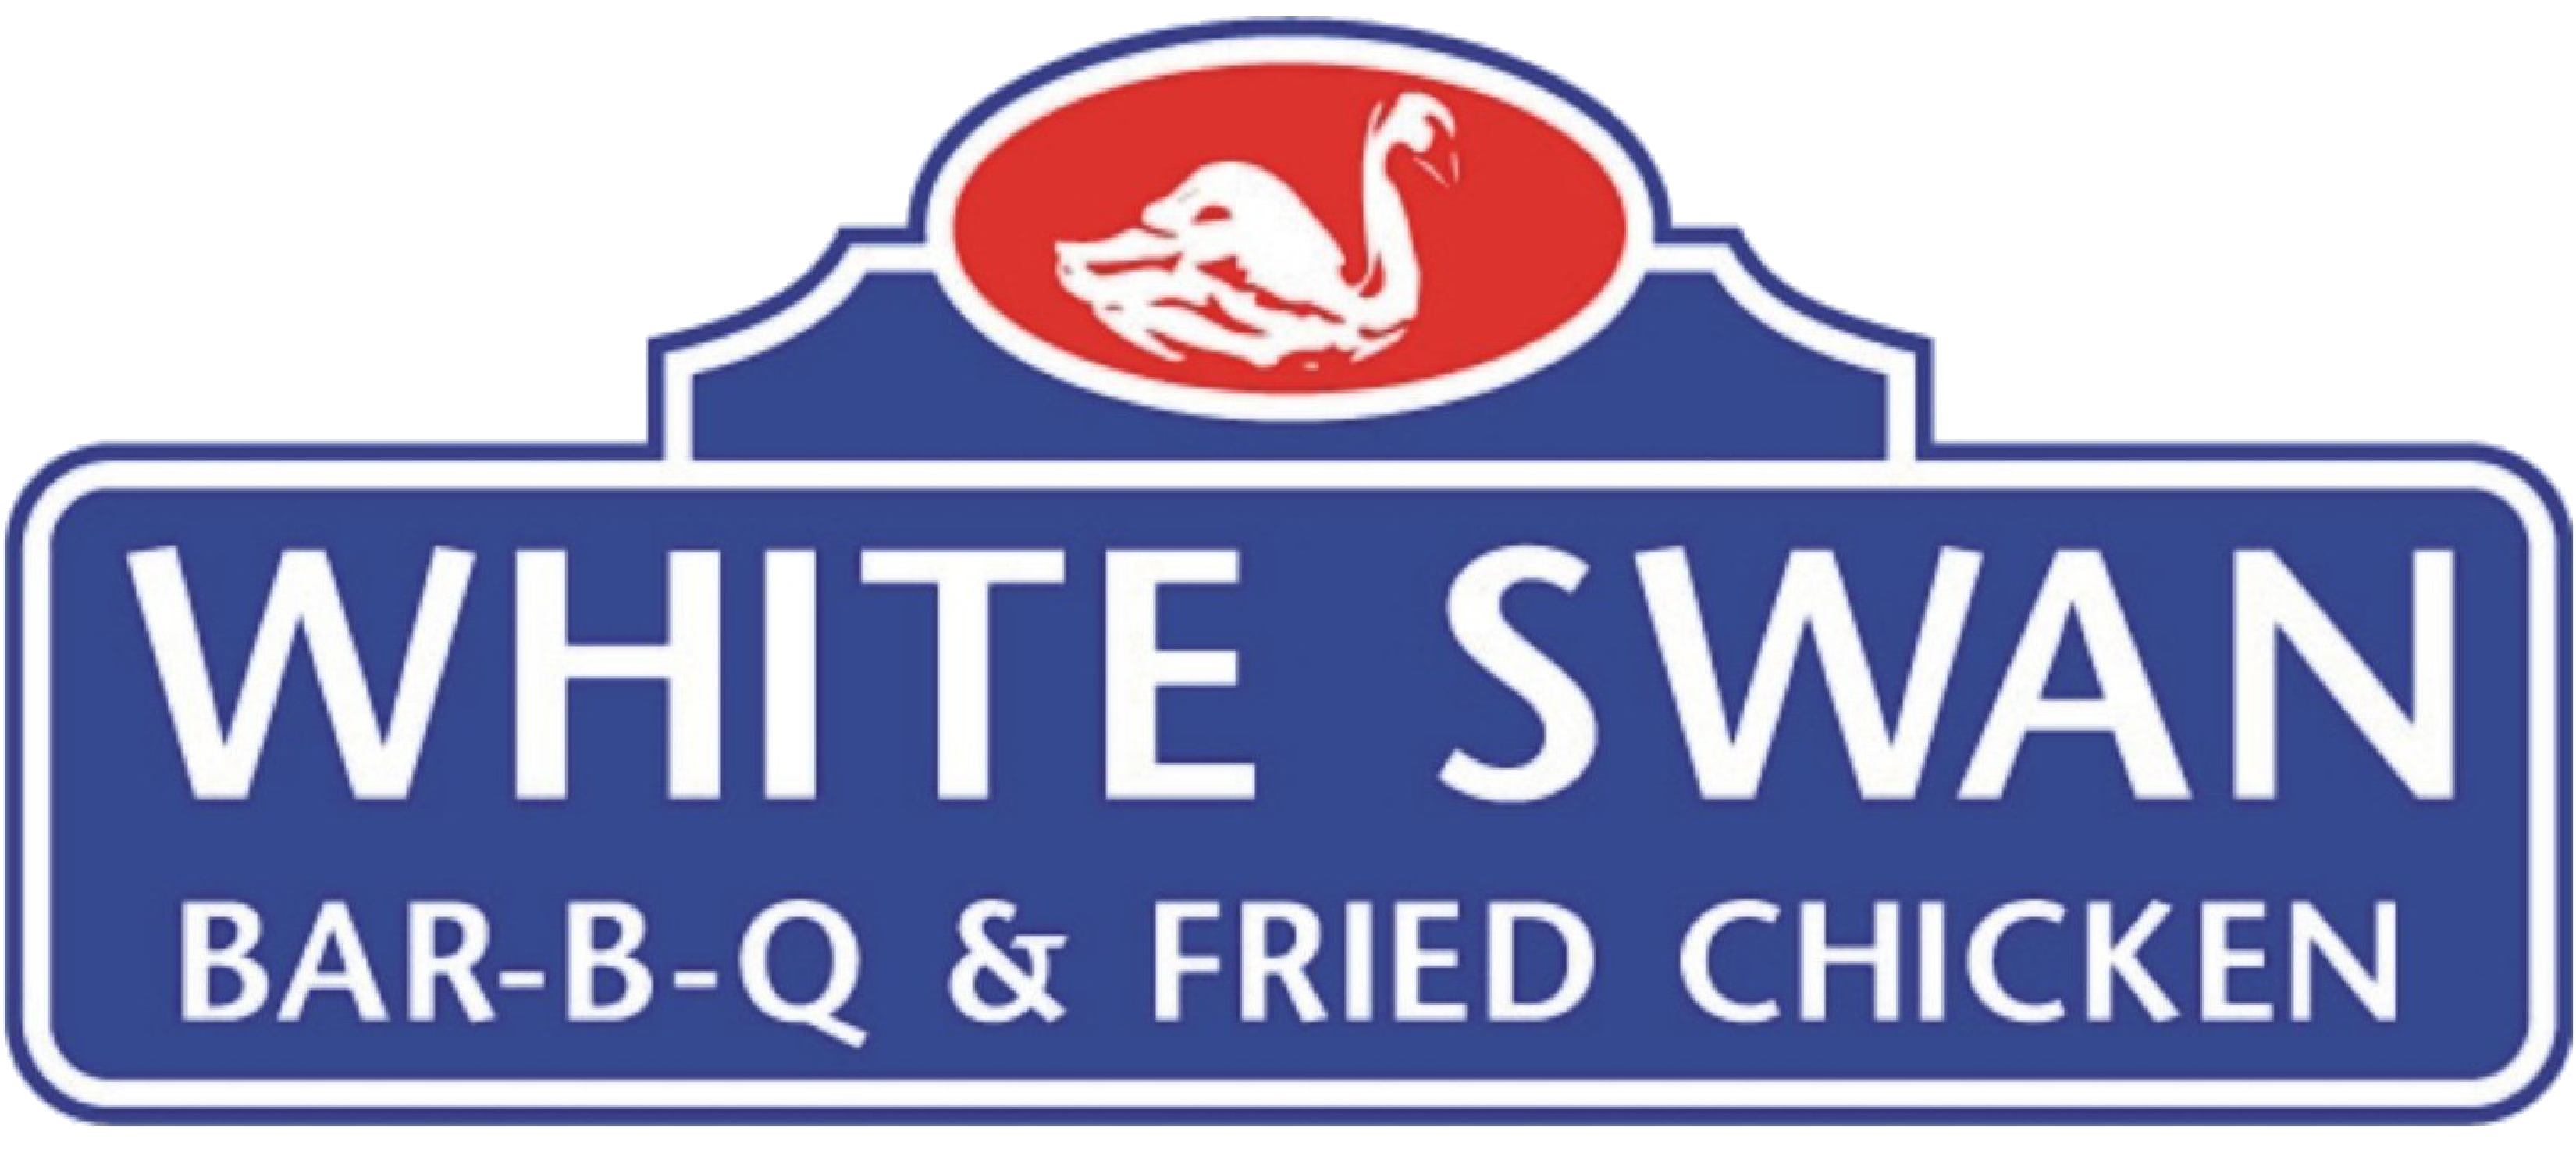 White Swan Bar-B-Q & Fried Chicken Home